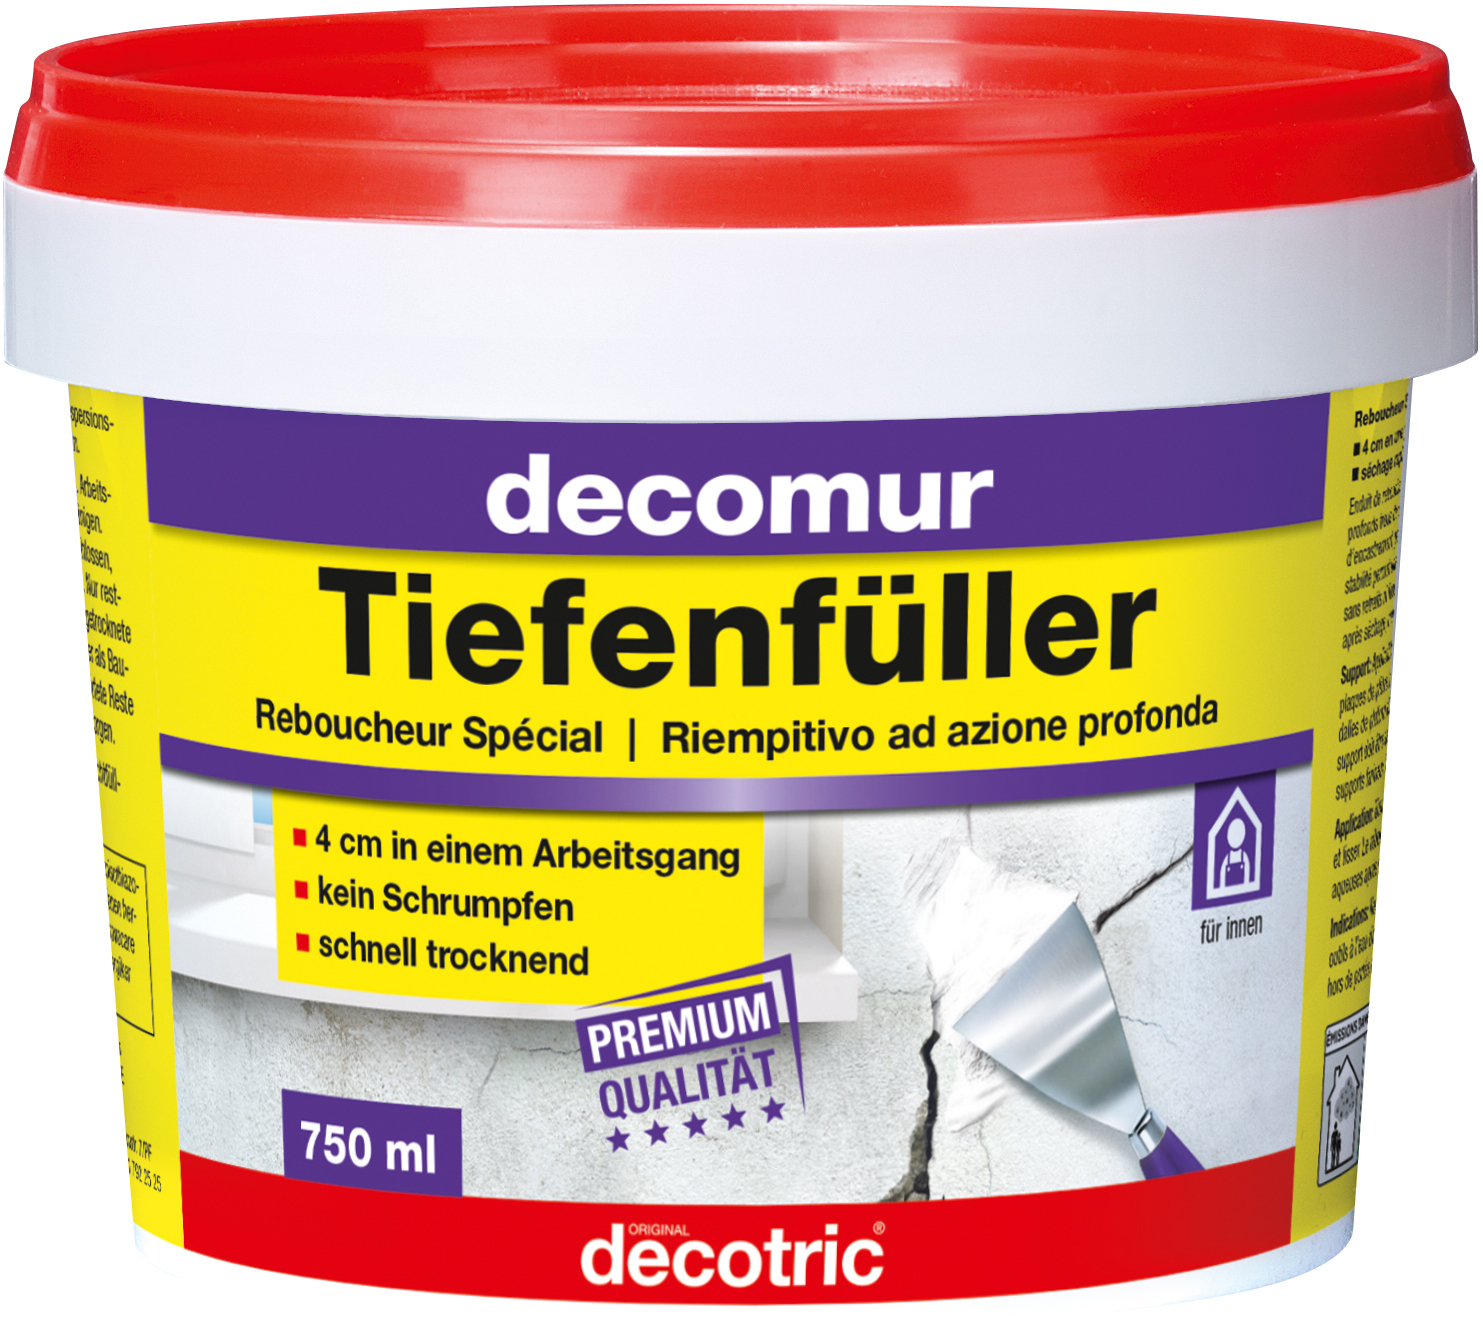 decotric decomur Tiefenfüller